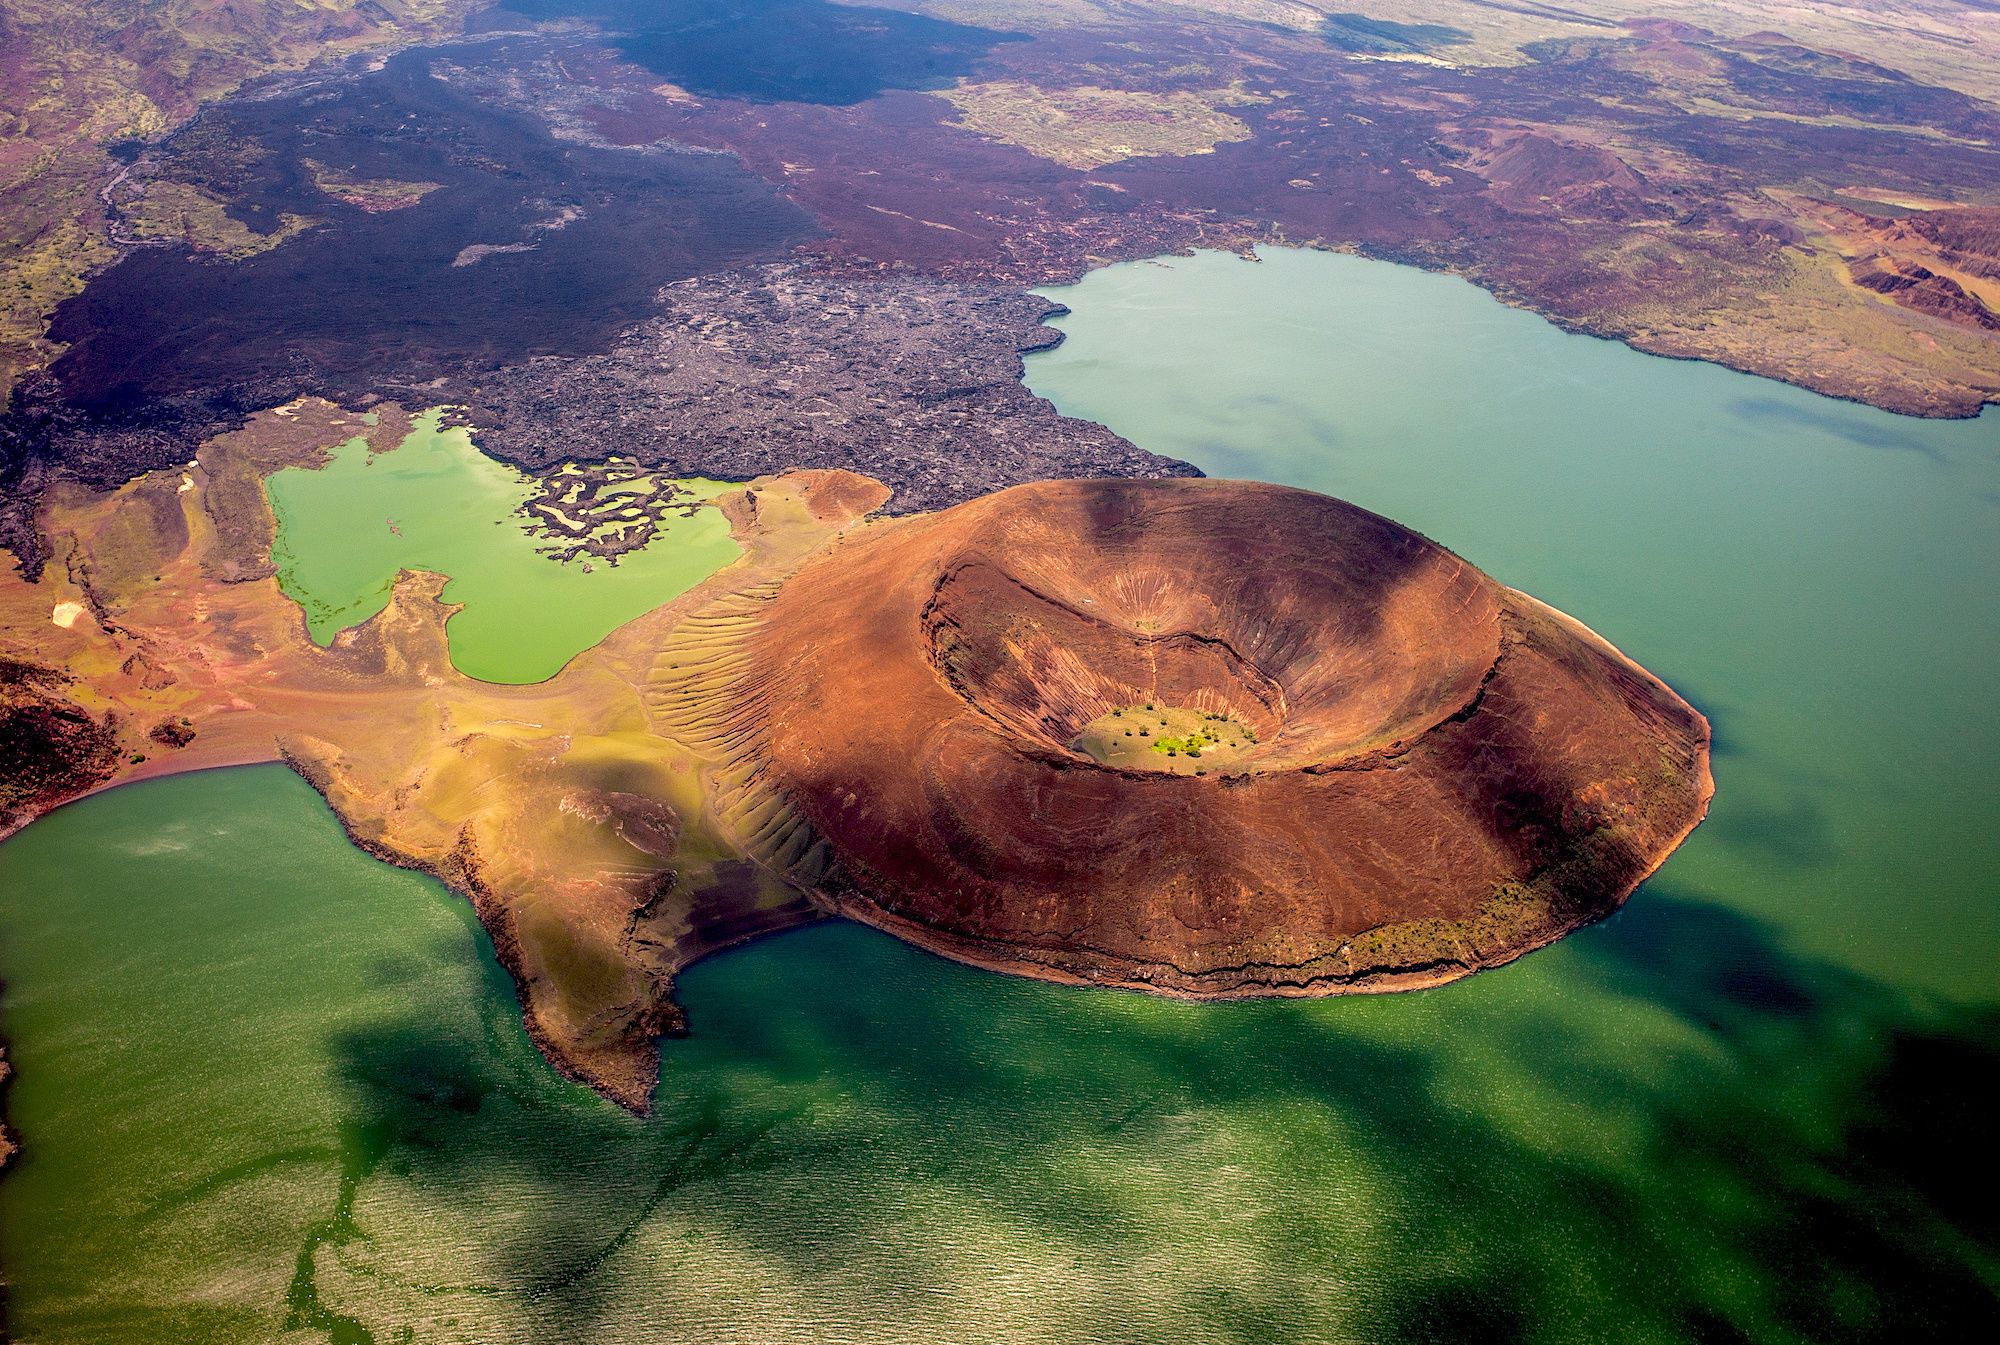  Jade colored waters of Lake Turkana